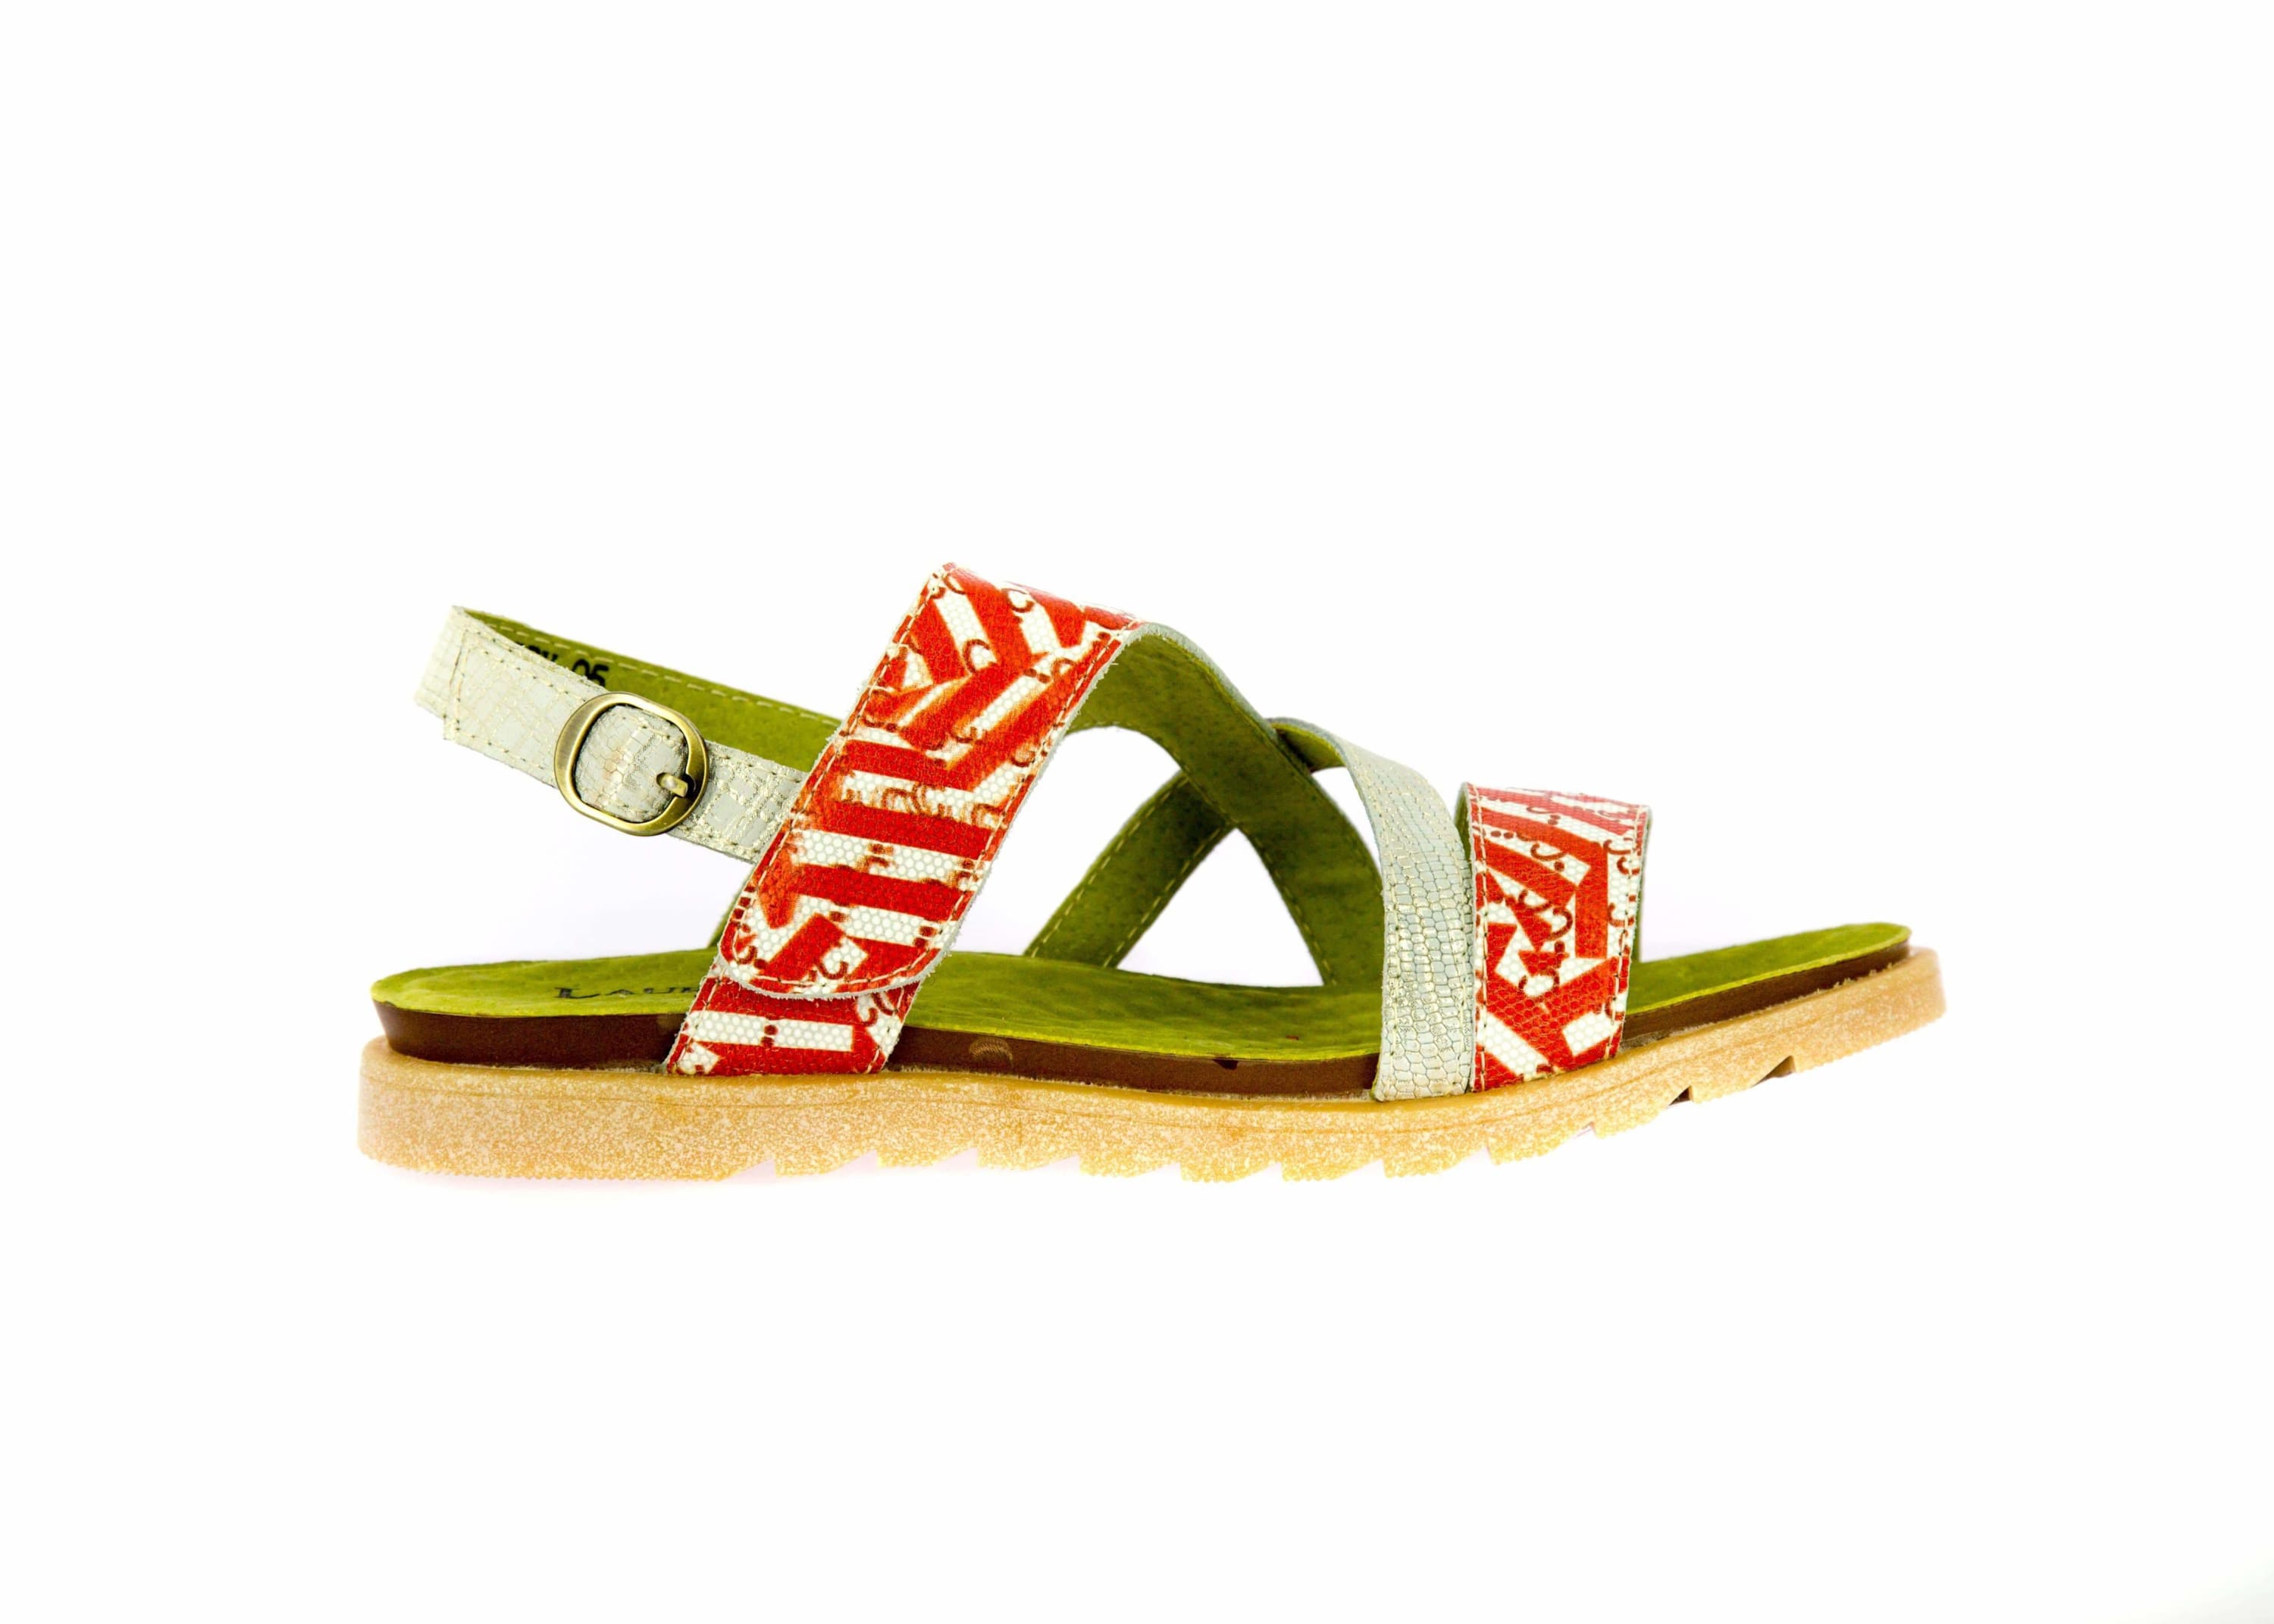 Schuh DORRY05 - Sandale